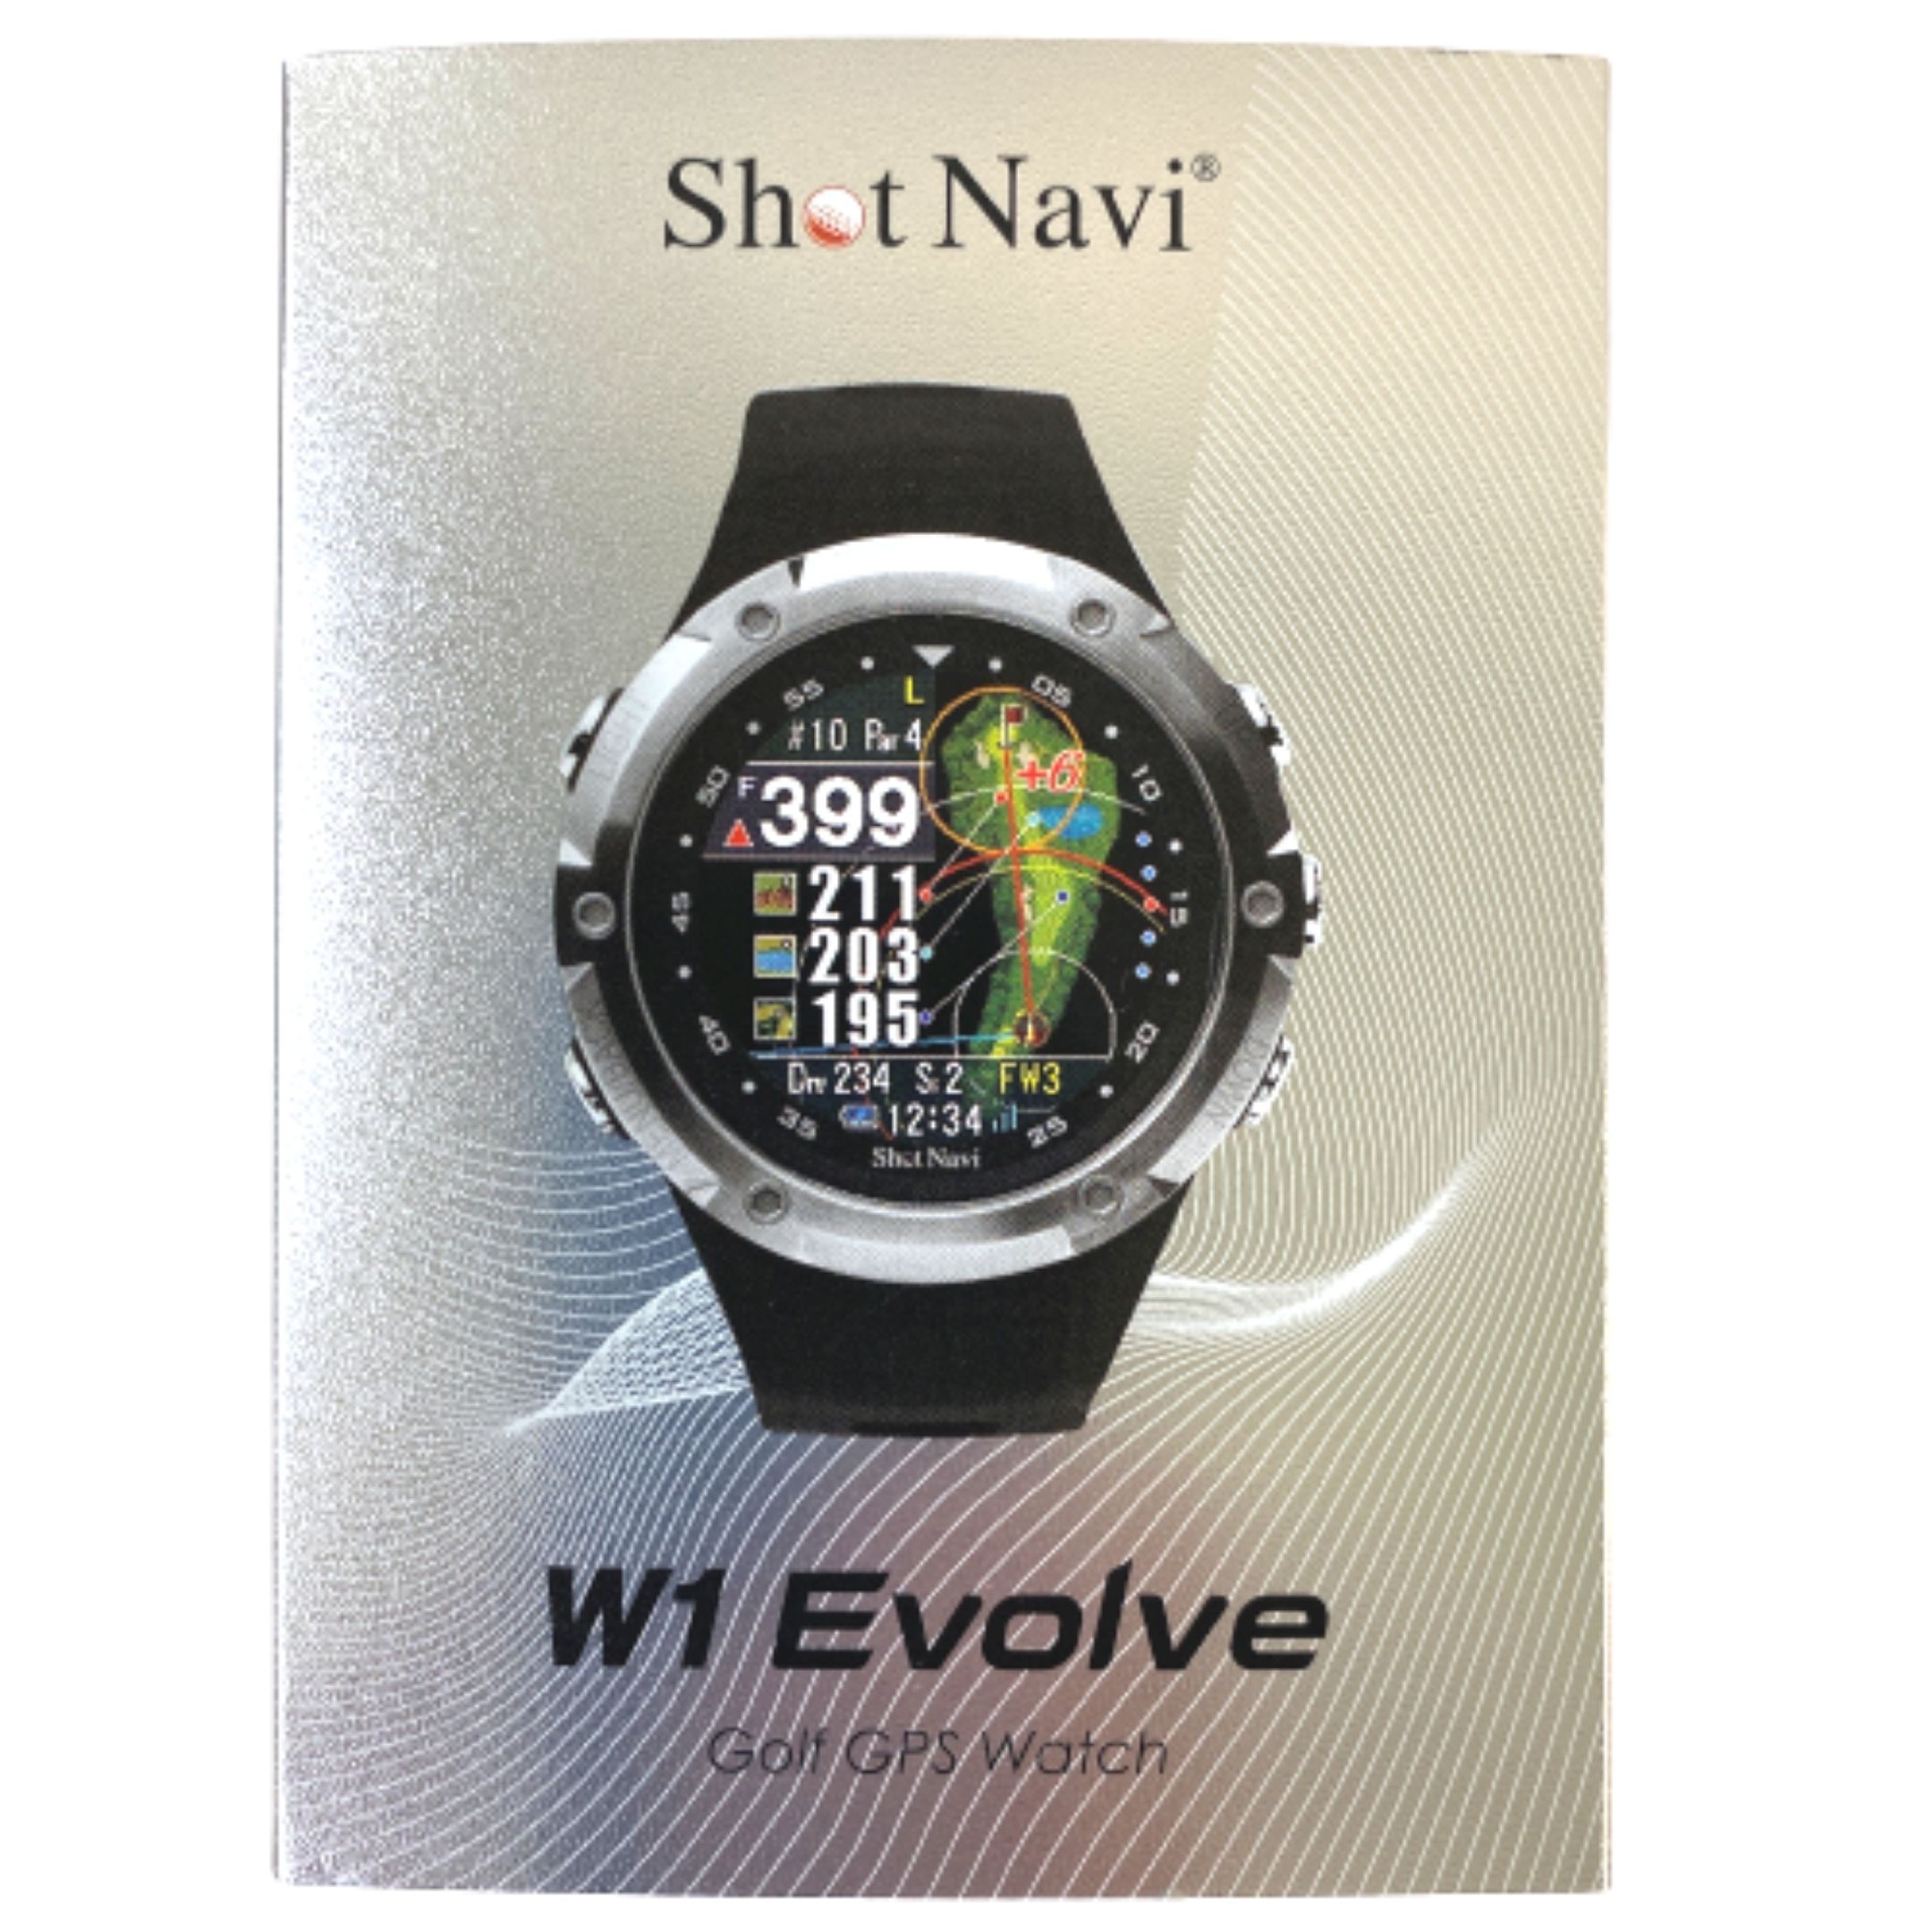 Shot Navi W1 Evolve GPS ゴルフ ショットナビ-